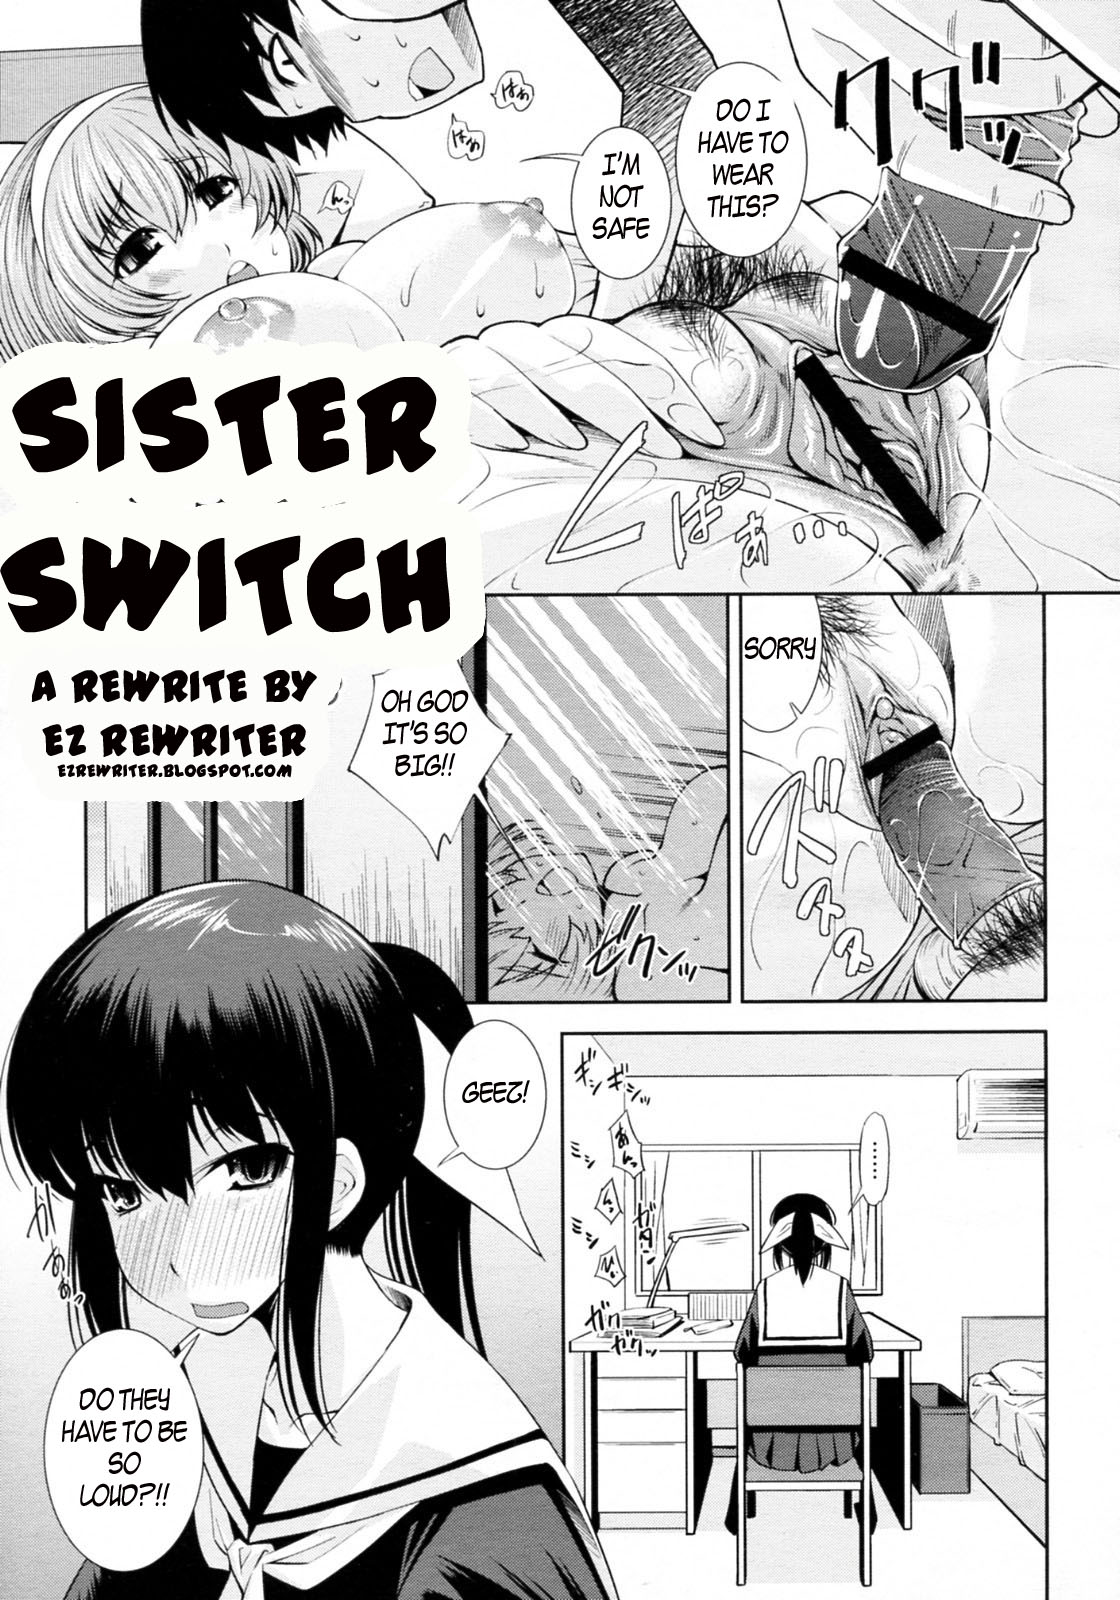 Sister Switch (rewrite by ezrewriter) 